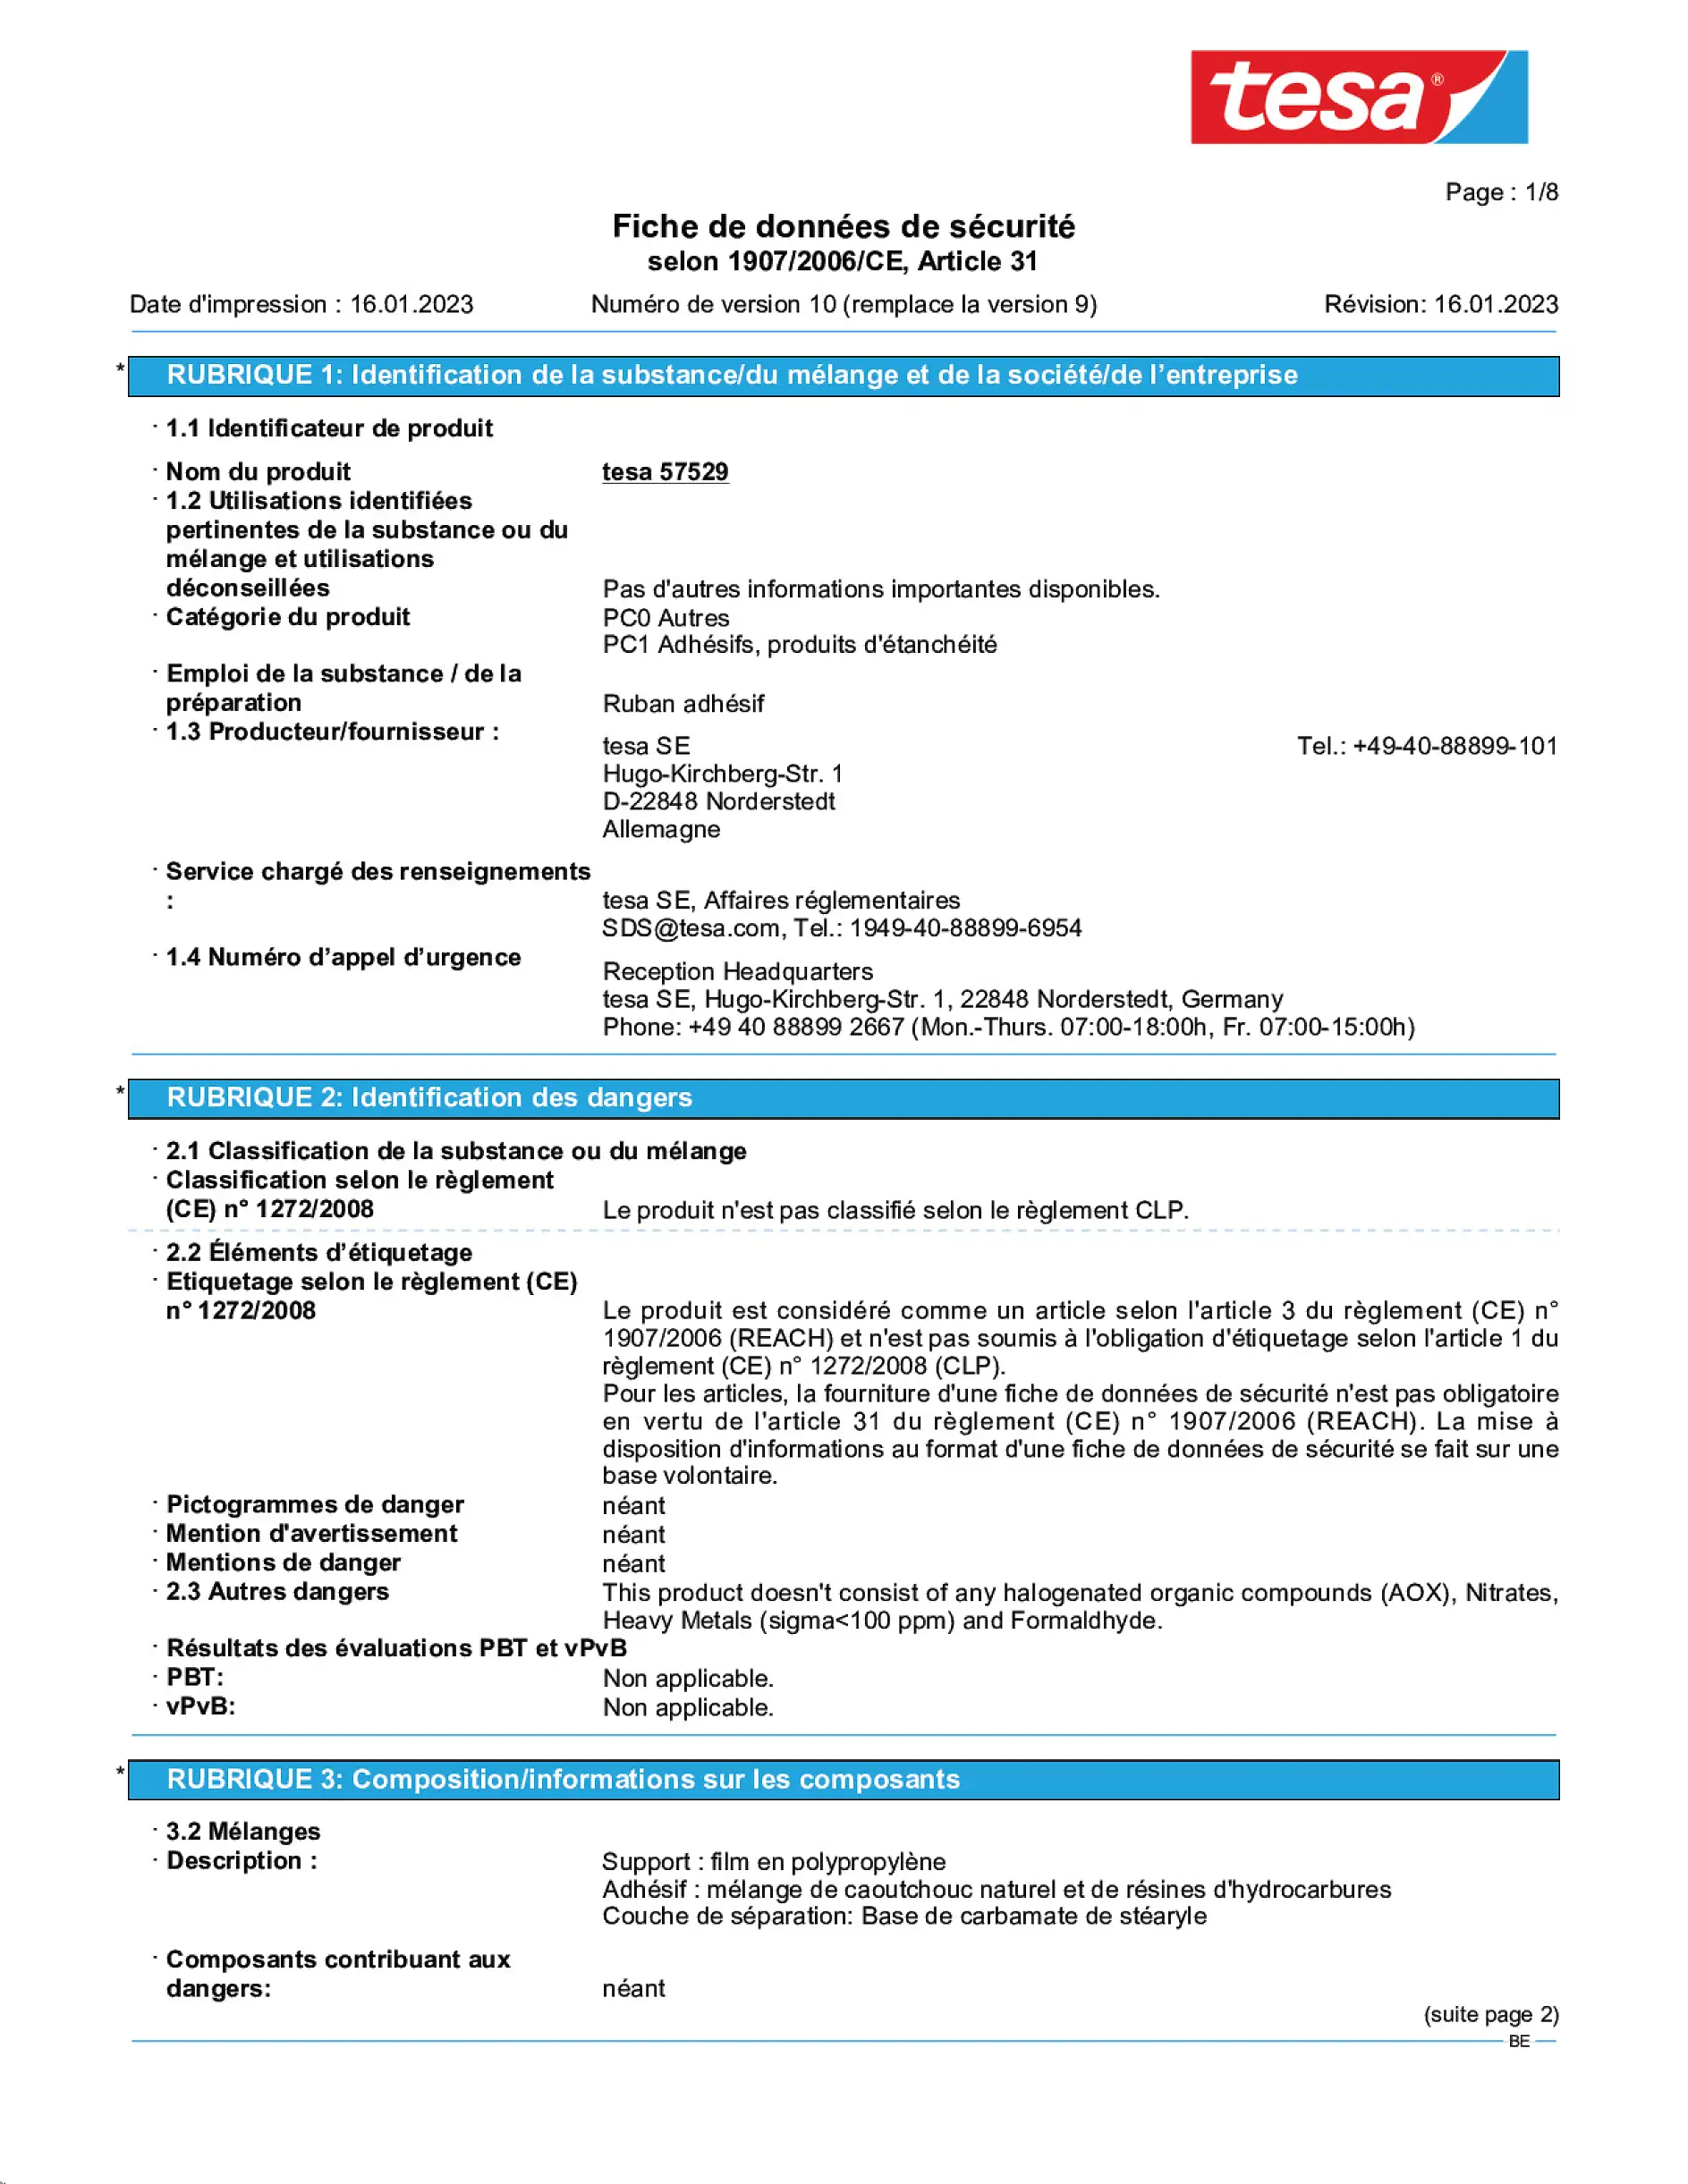 Safety data sheet_tesapack® 57456_nl-BE_v10